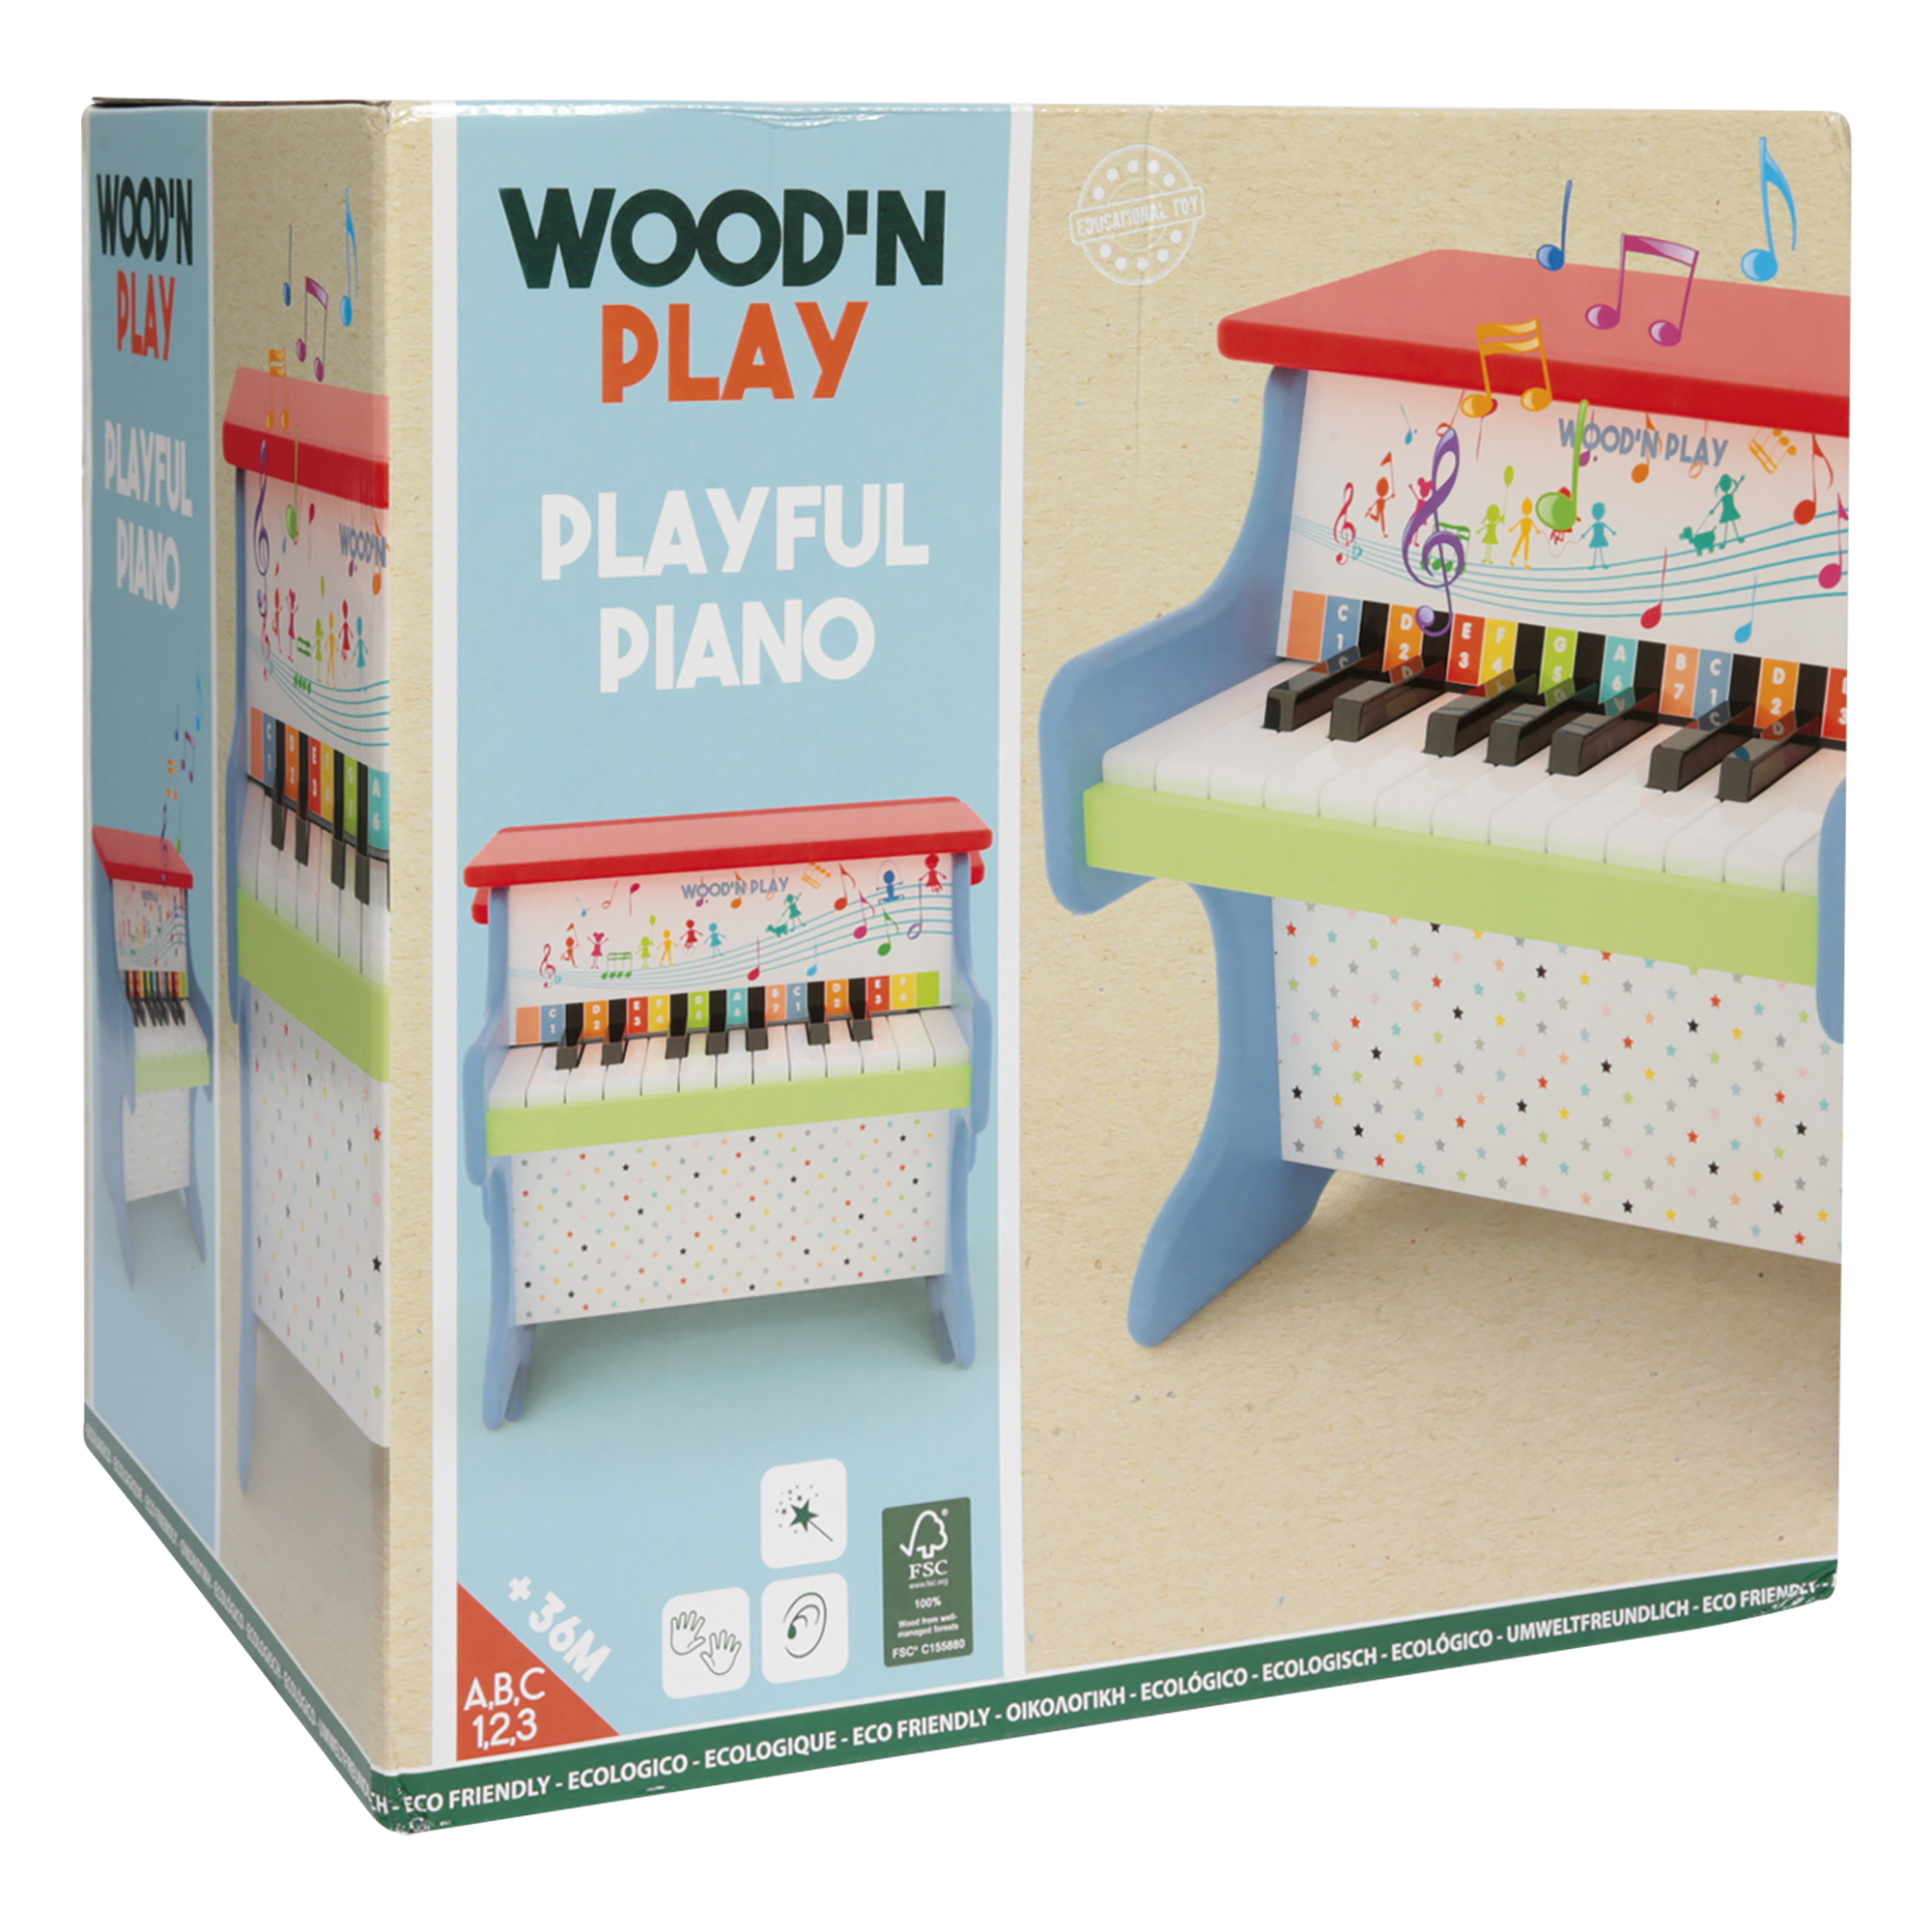 Mini pianoforte - WOOD 'N' PLAY